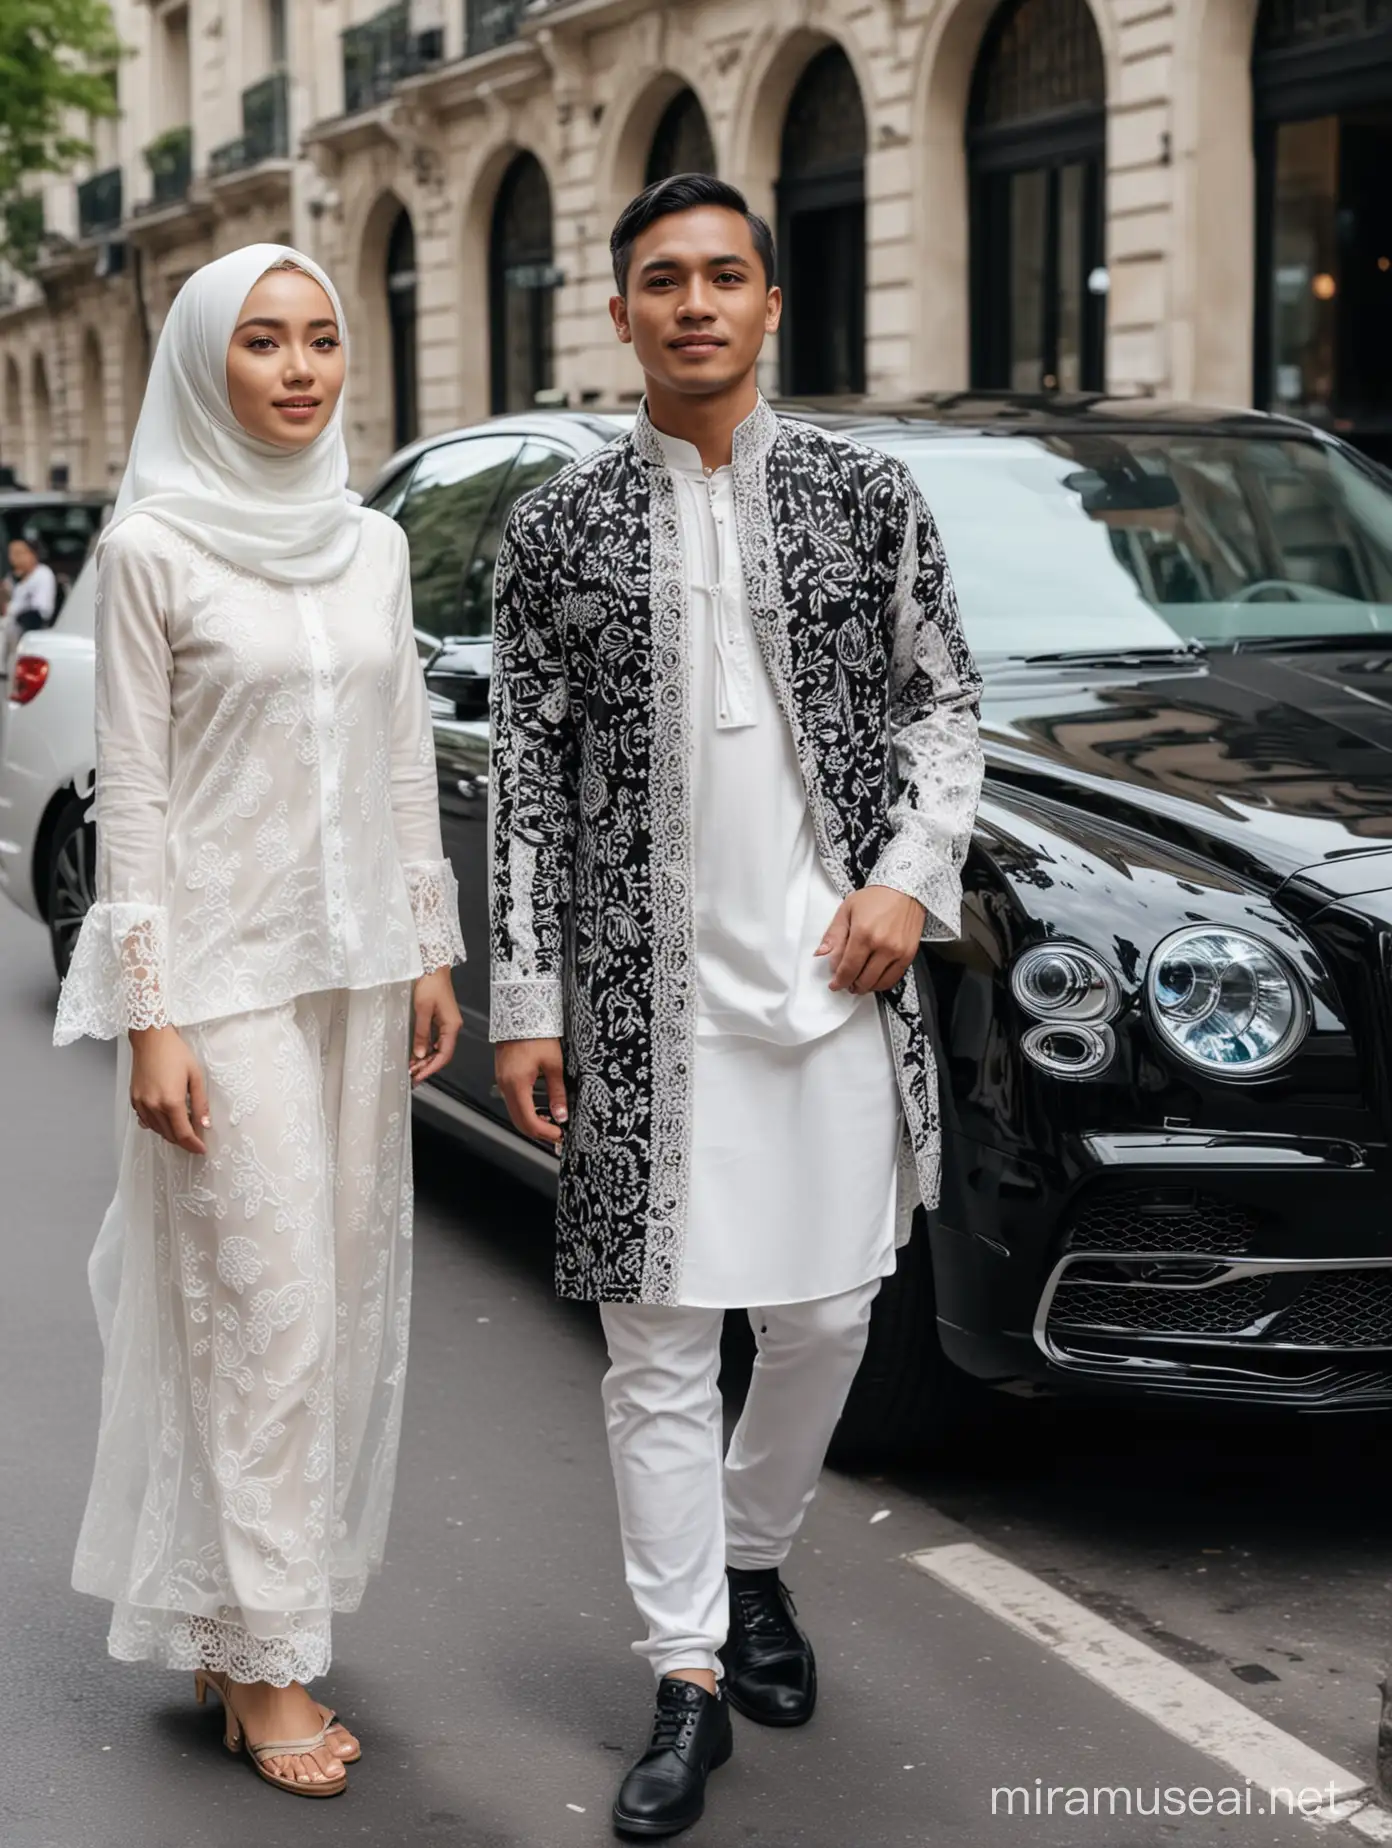 Indonesian Man and Girl in Elegant Attire near Black Bentley in Urban Paris